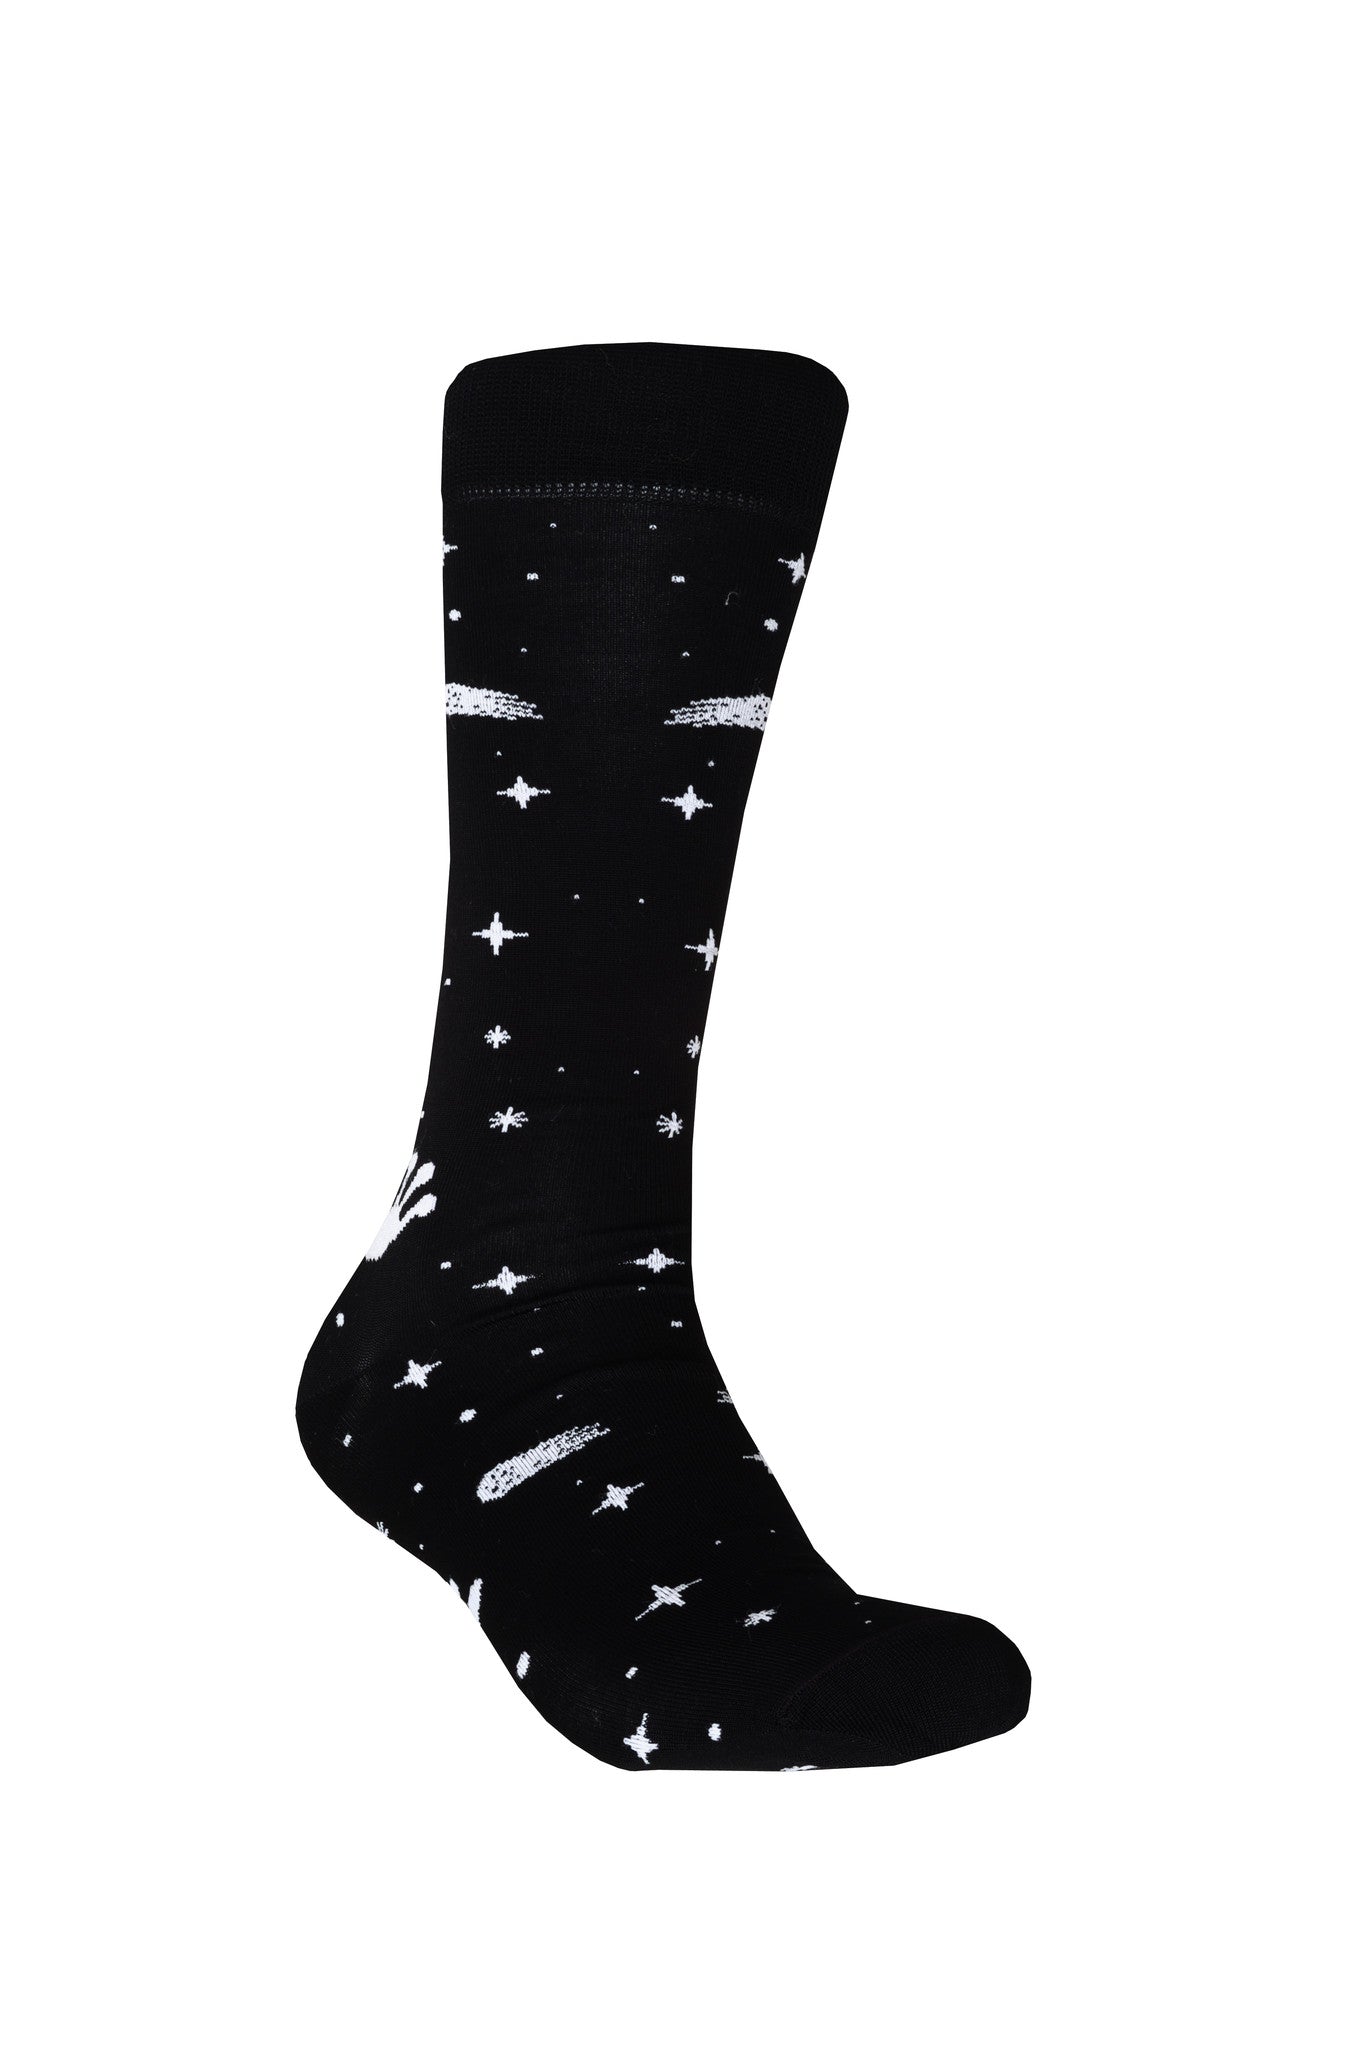 Giraffecool-Giraffe-Cool-Brand-Black-White-Galaxy-Space-Mercerized-Cotton-Fashion-Socks-Front